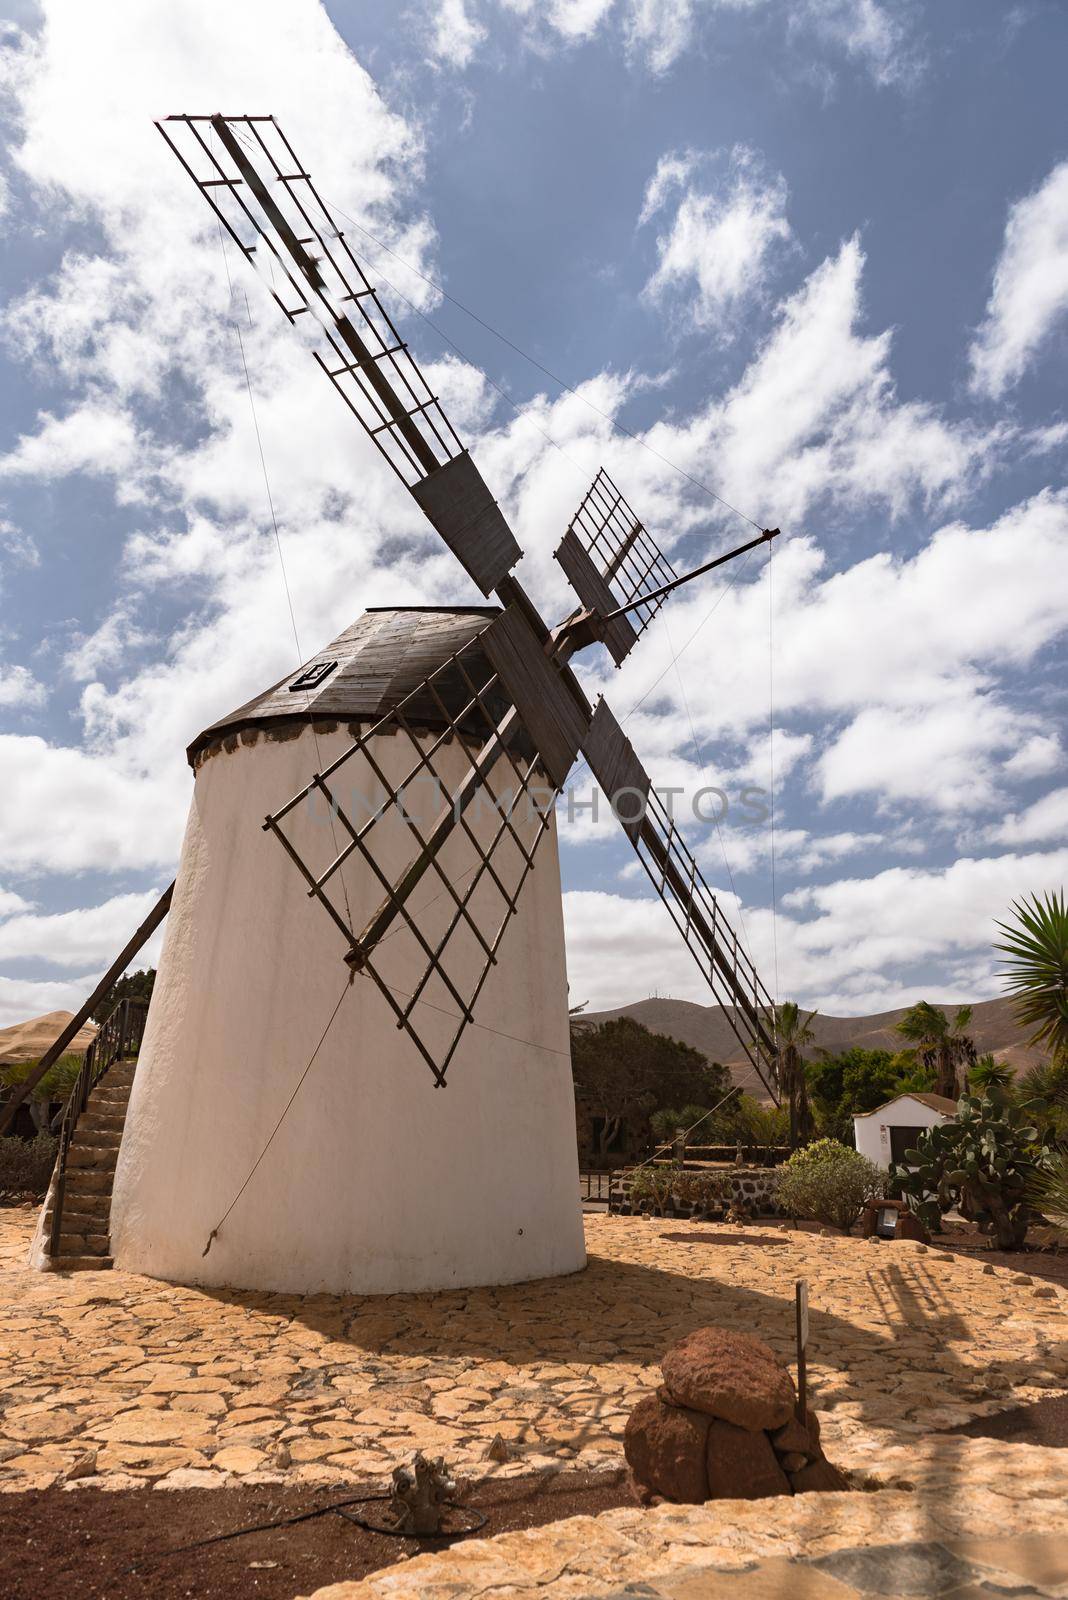 Windmills on the island of Fuerteventura in Spain.